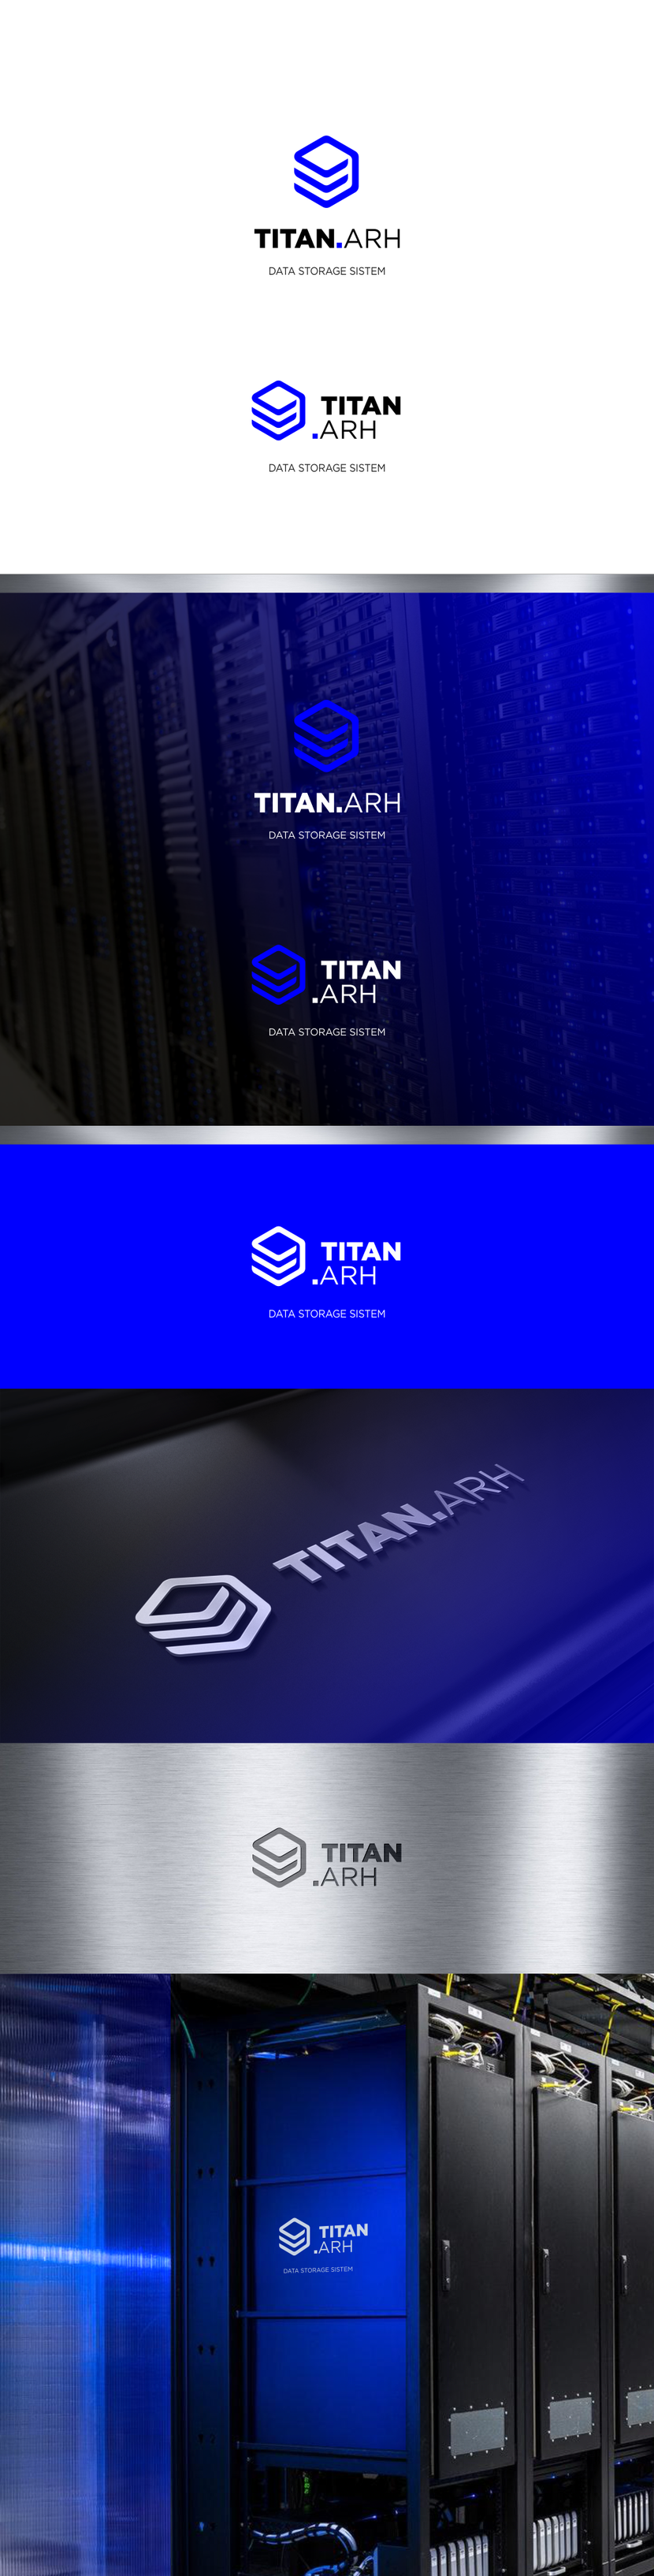 TITAN.ARH Логотип системы хранения данных